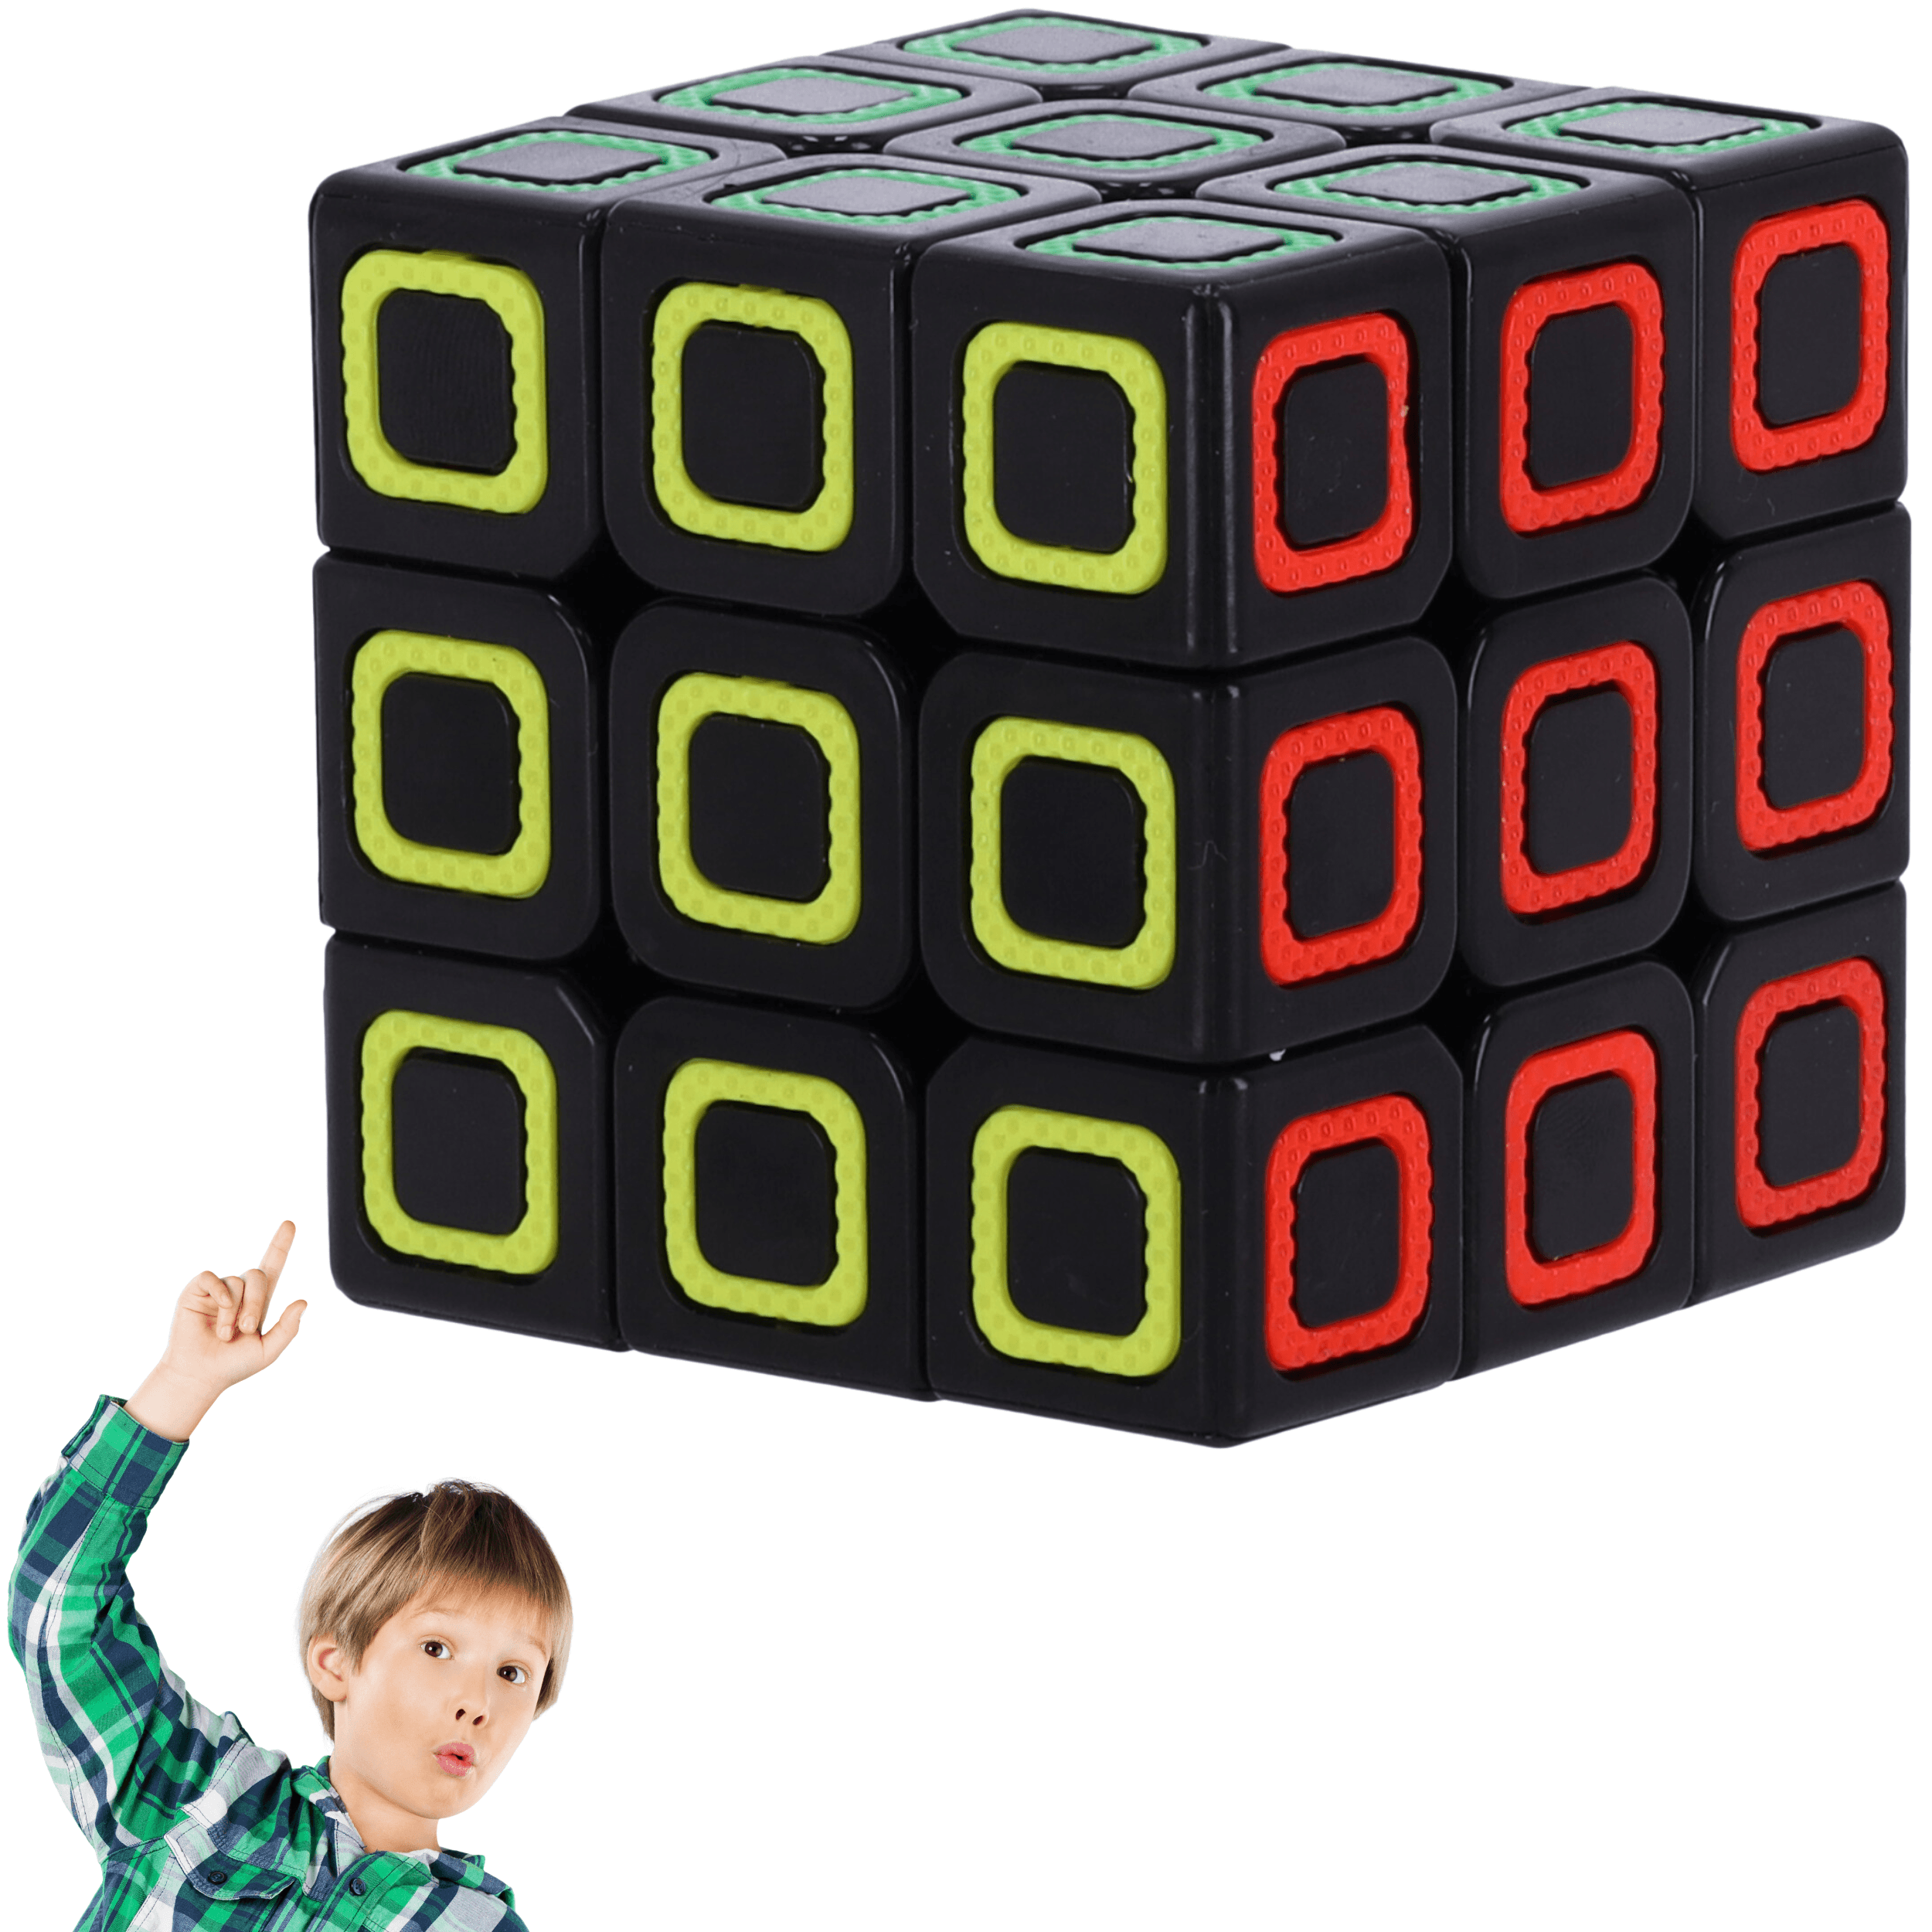 Modern puzzle, logic cube, Rubik's Cube - type VIII